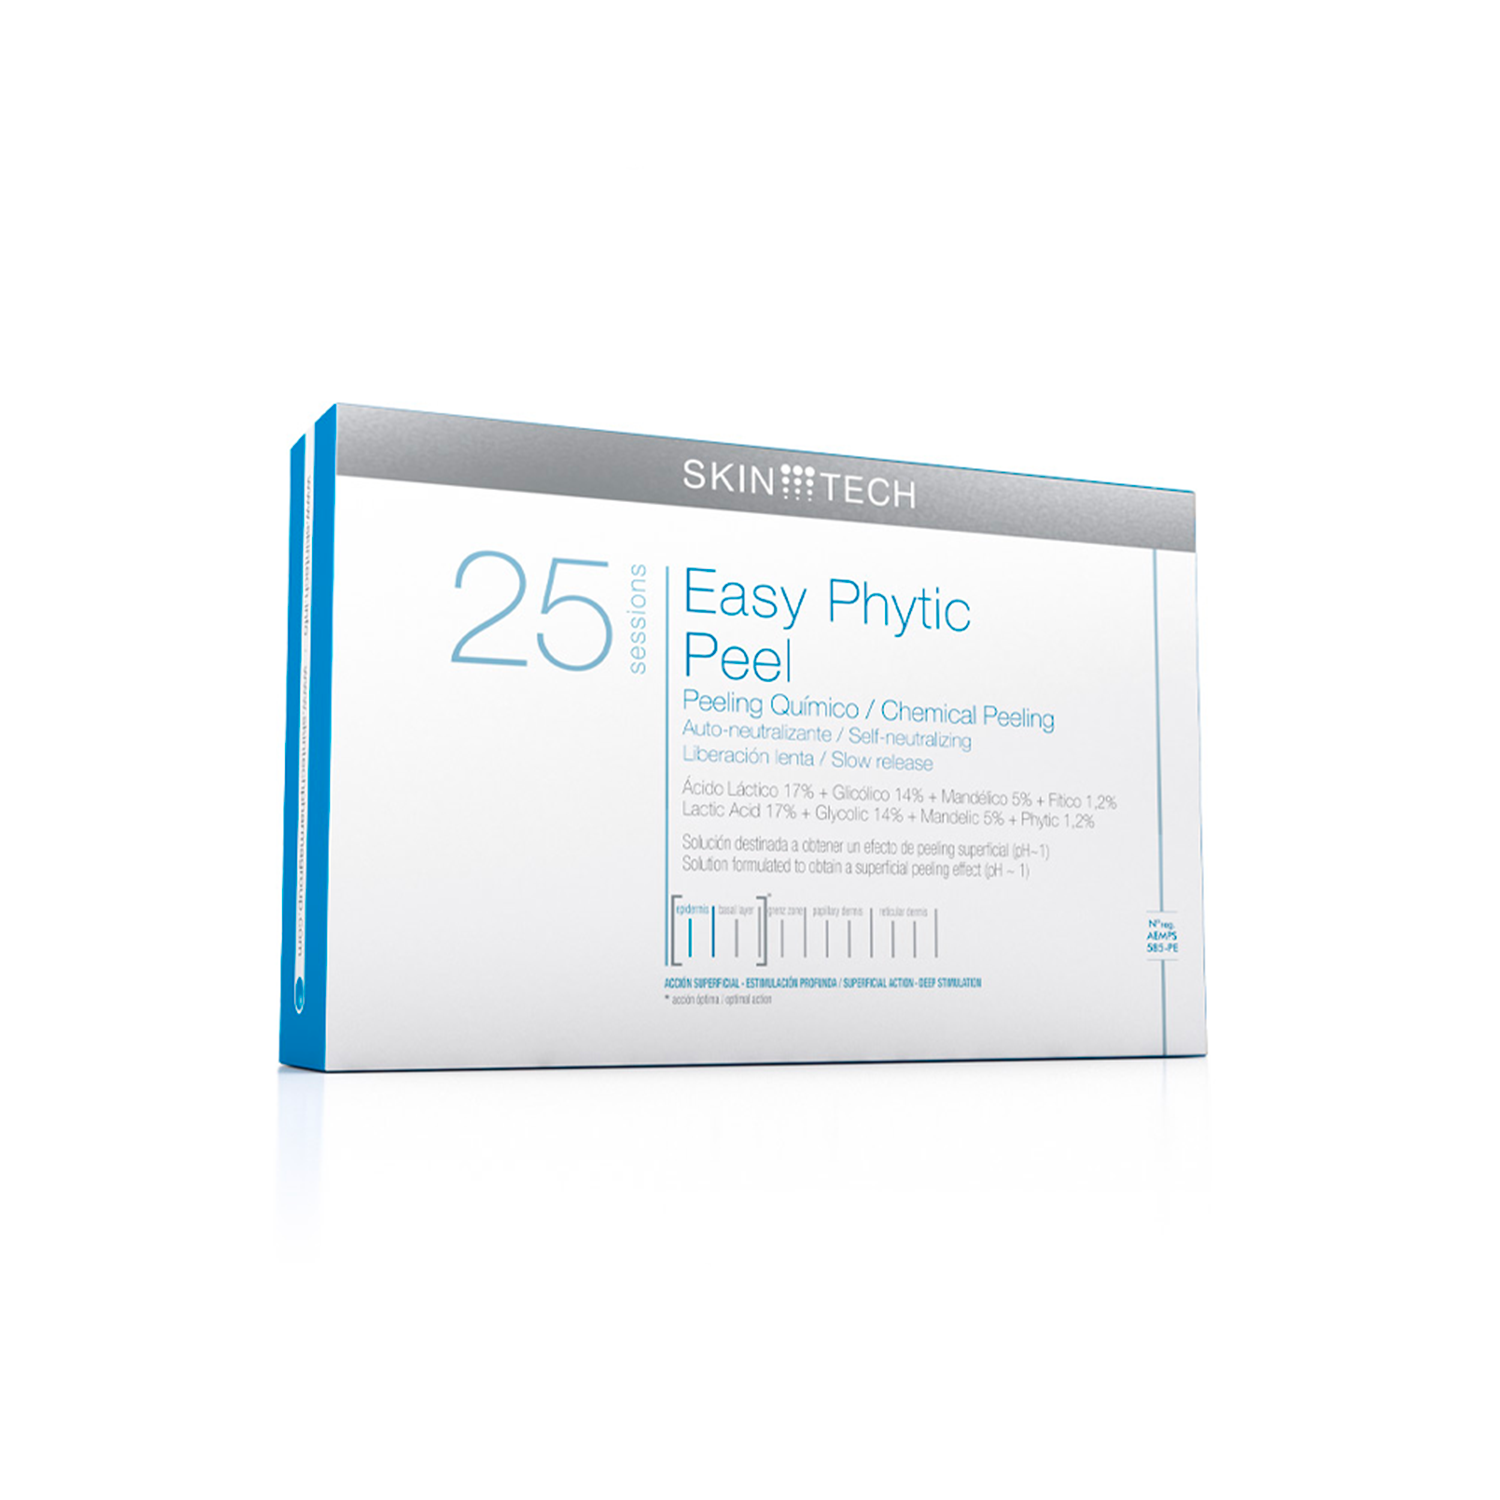 Skin Tech Easy Phytic Peel 25 sessions